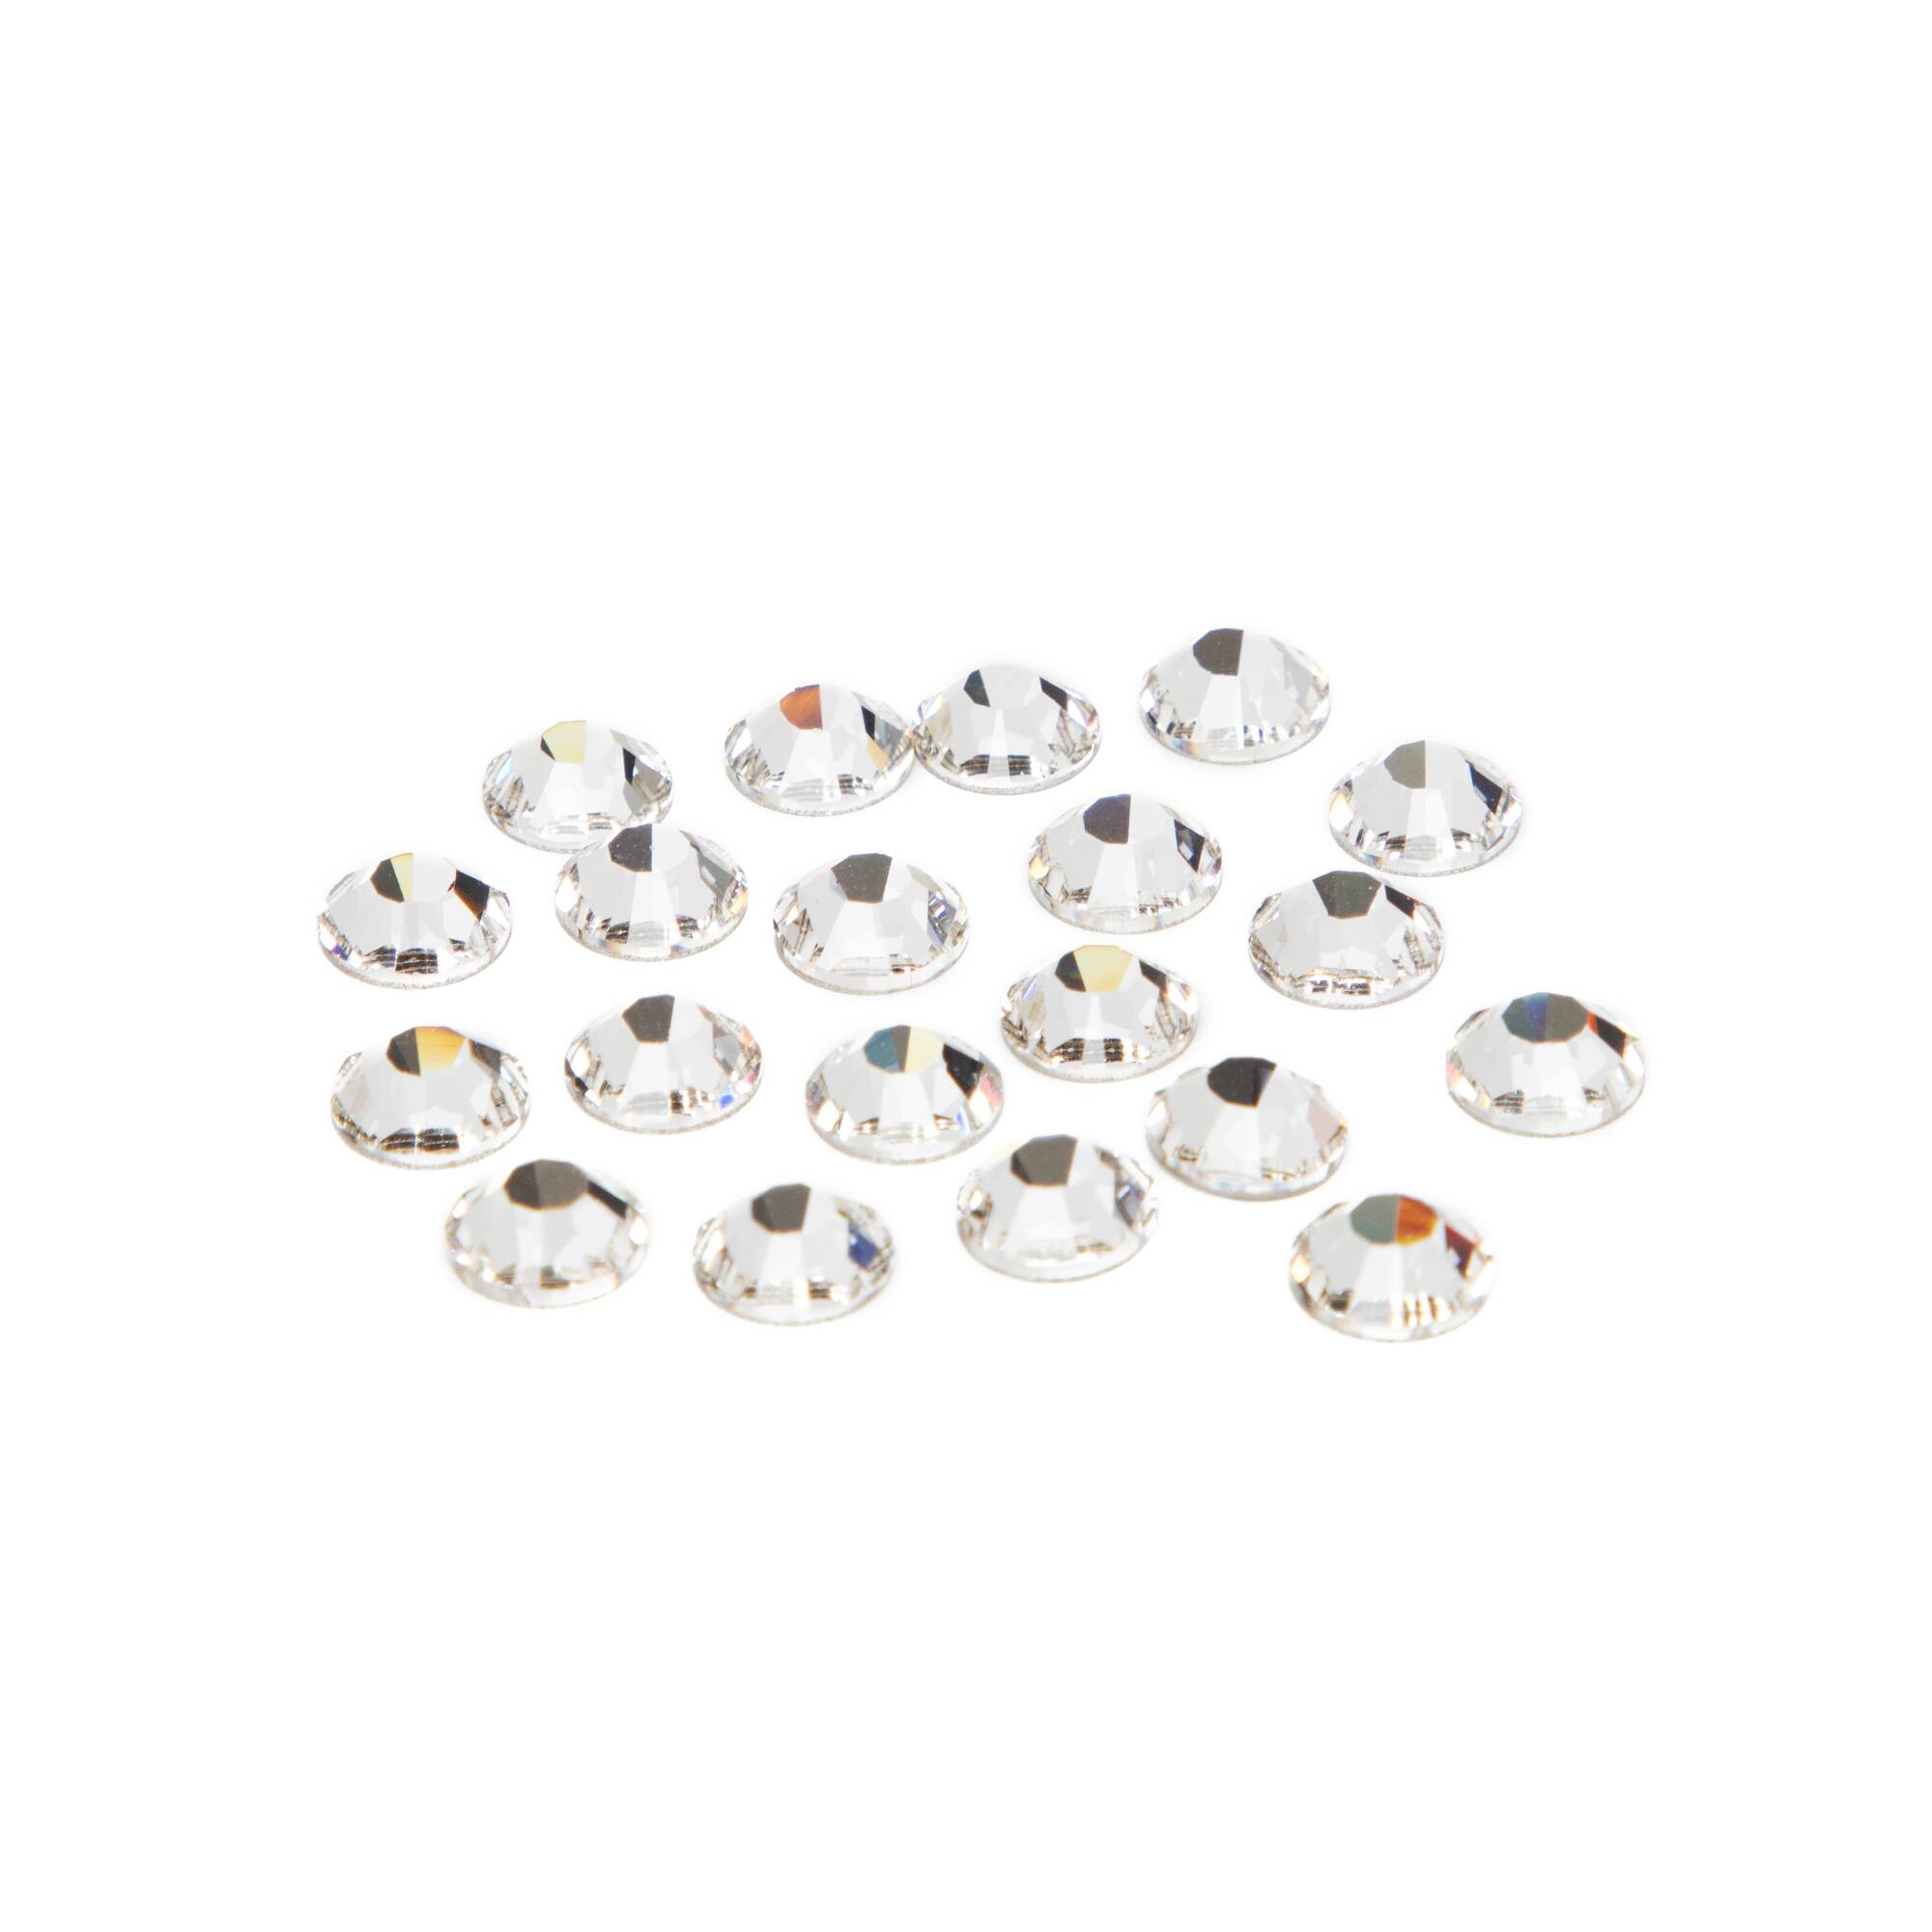 SS30 Round Flatback Austrian Crystals by Bead Landing&#x2122;, 20ct.